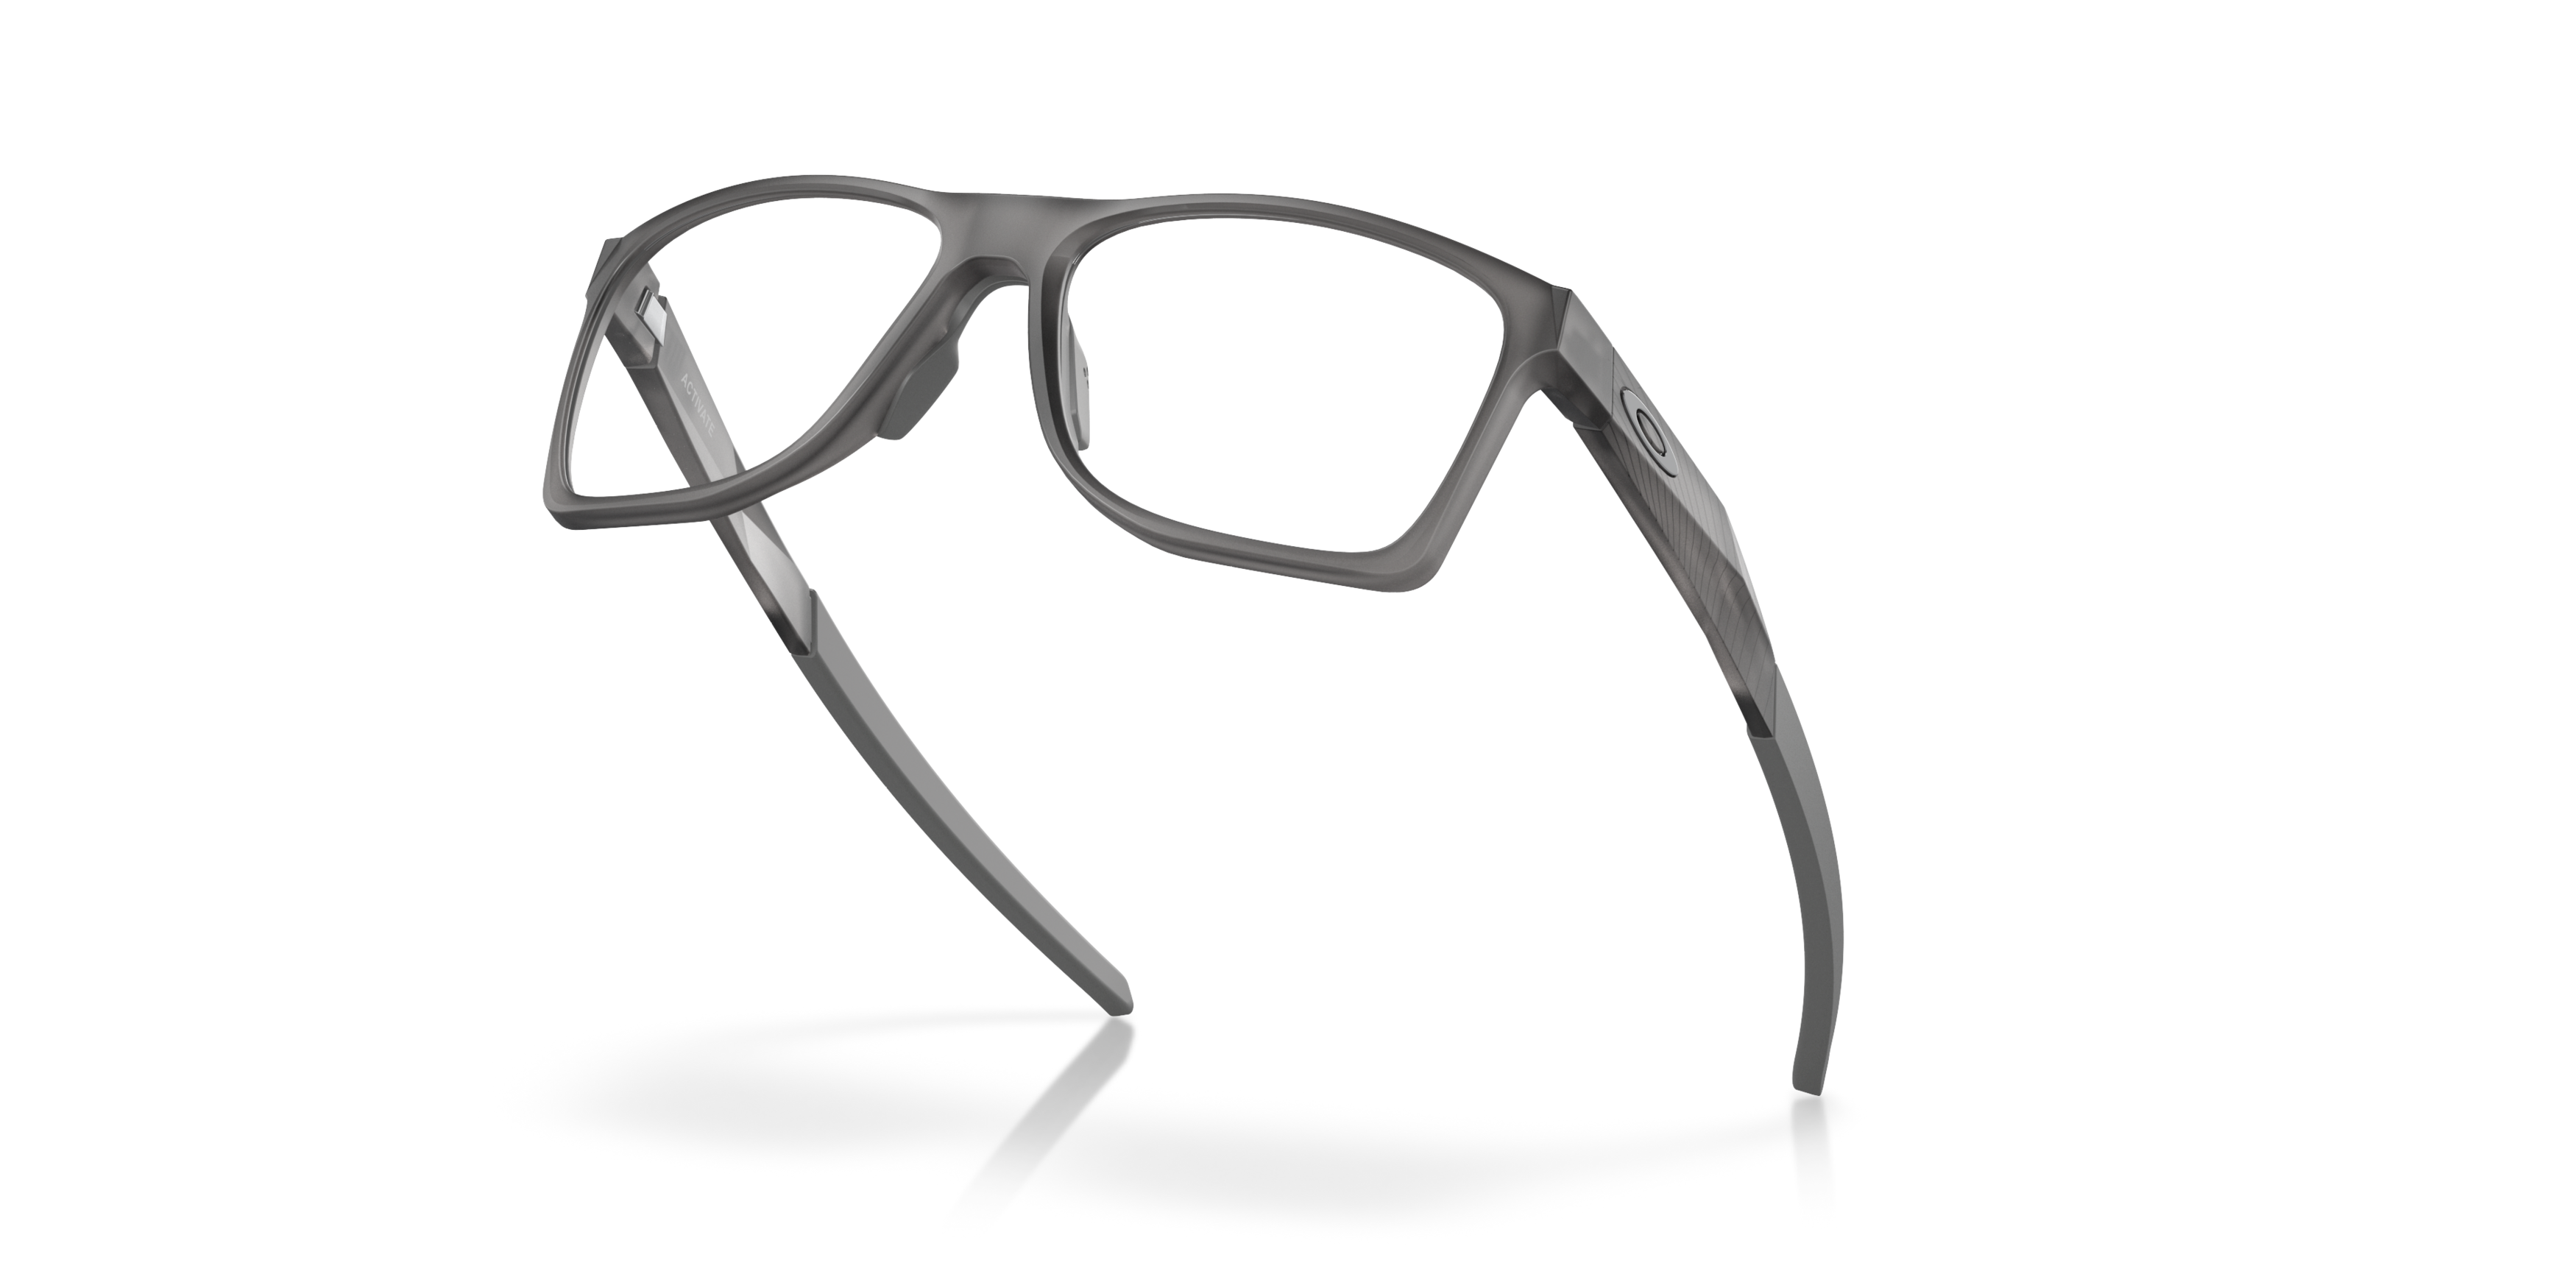 Bottom_Up Oakley OX 8173 Glasses Transparent / transparent, clear